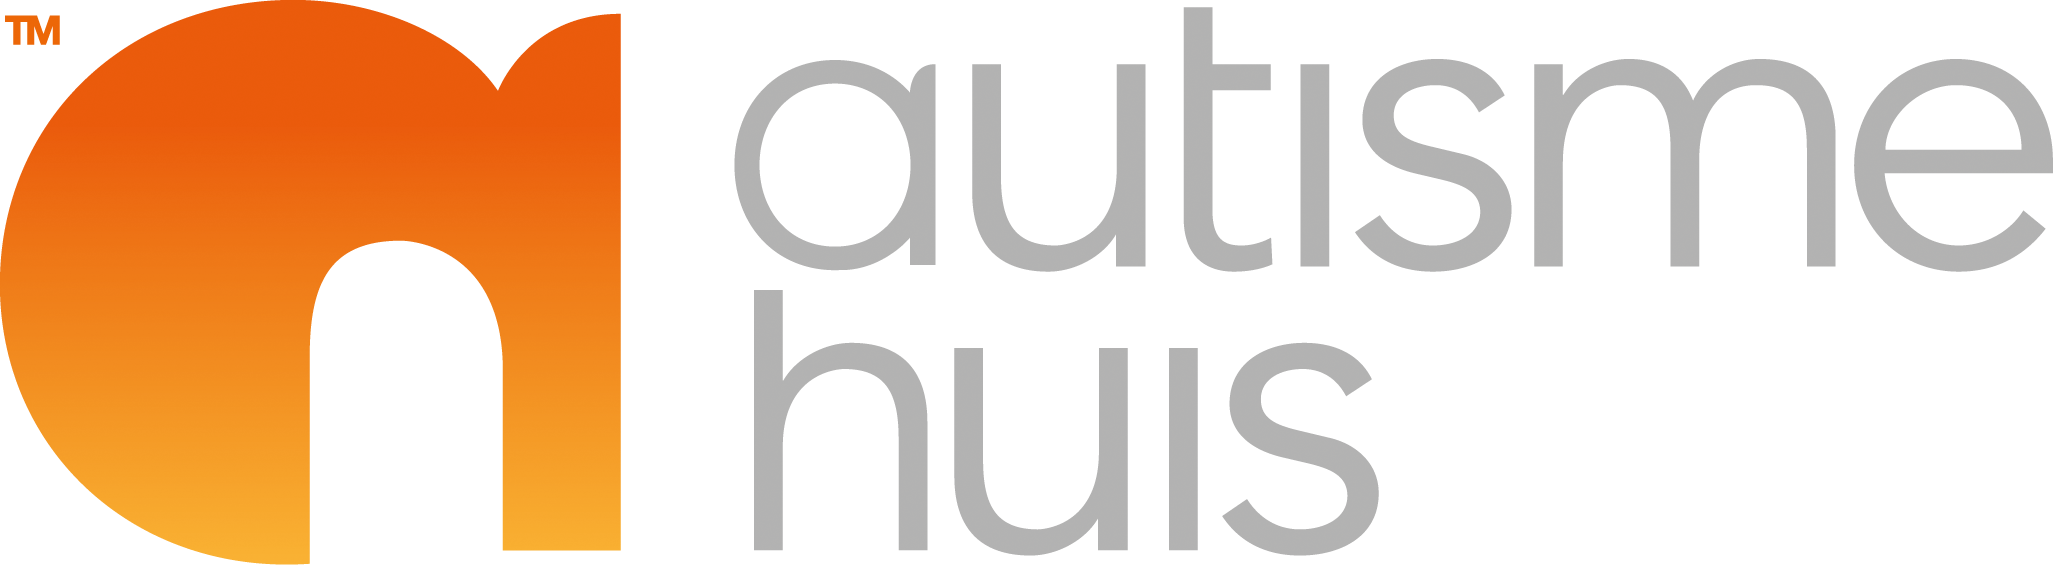 https://tekstmodel.nl/wp-content/uploads/2021/08/autismehuis-logo-met-txt1.png